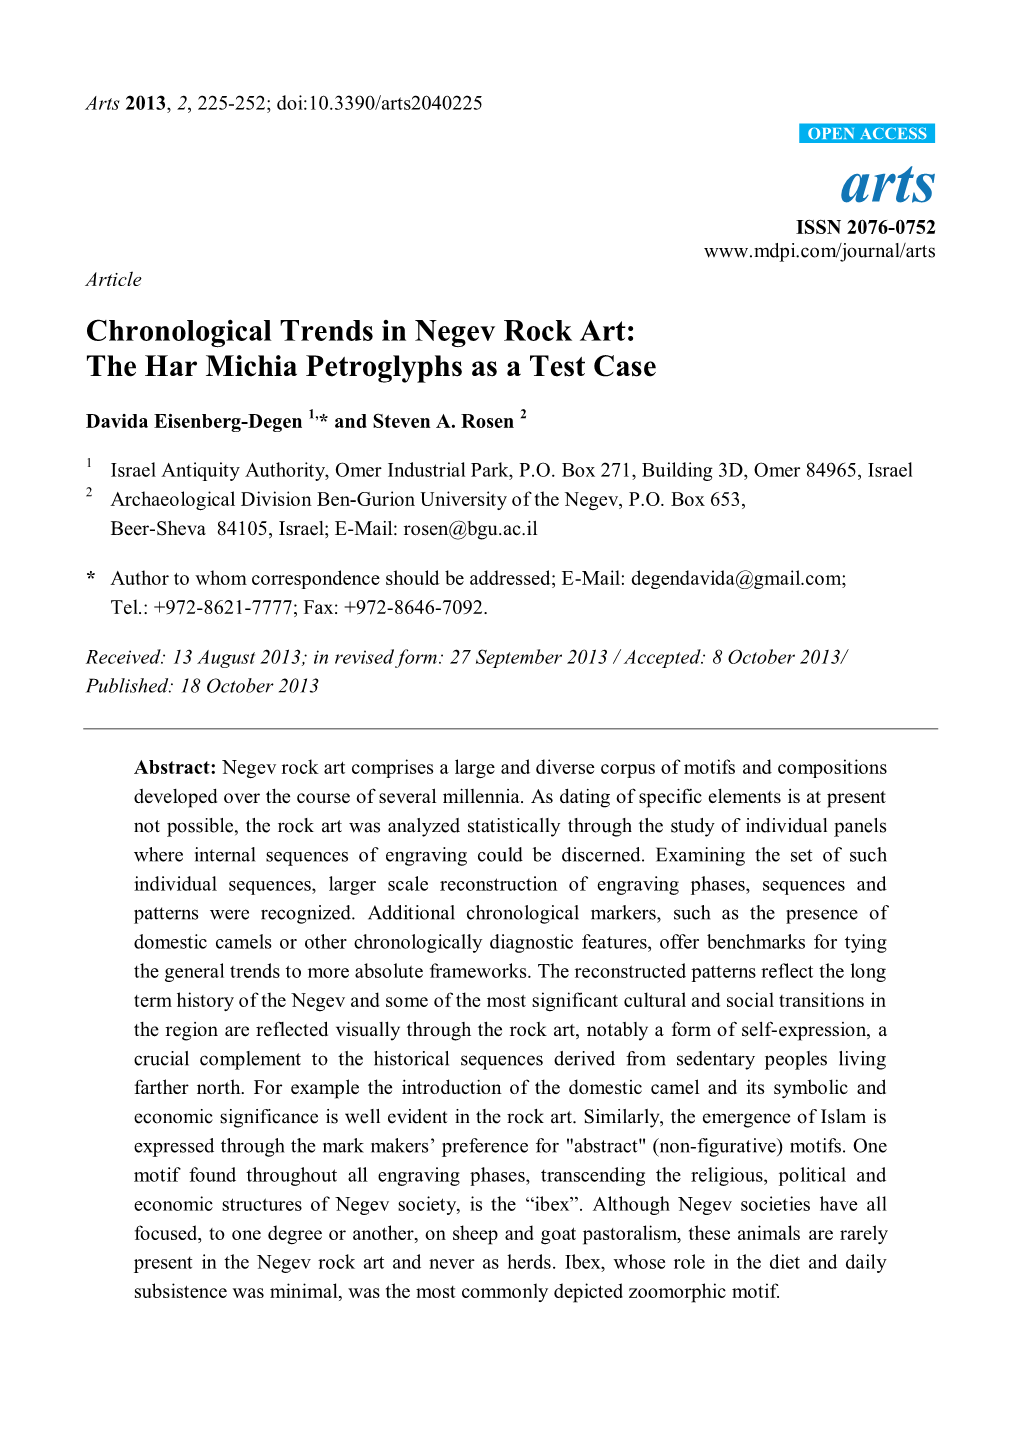 Chronological Trends in Negev Rock Art: the Har Michia Petroglyphs As a Test Case